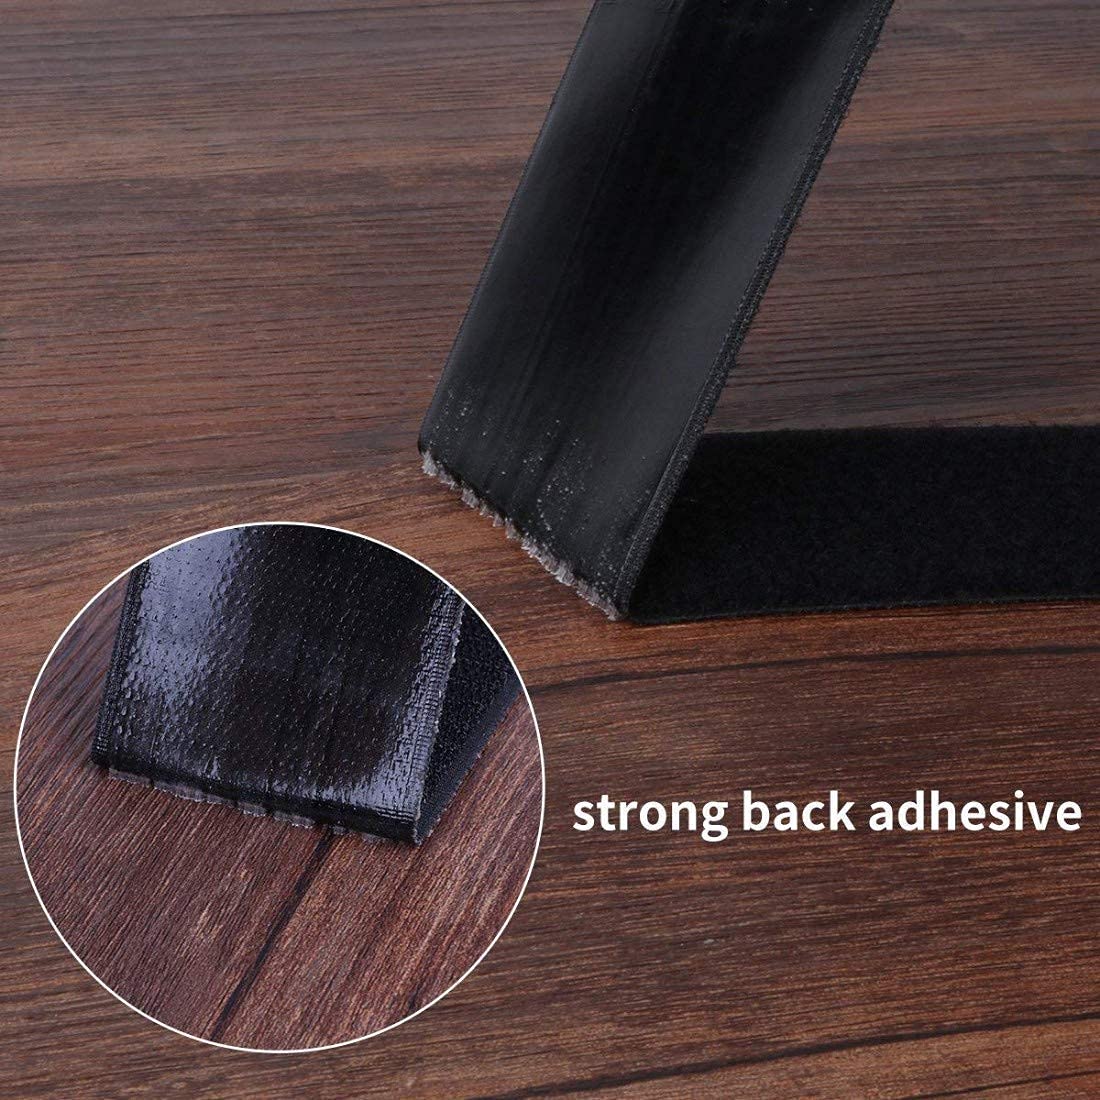 Self Adhesive Hook Tape and Self Adhesive Loop Tape - Black Color (25mm) LifeKrafts